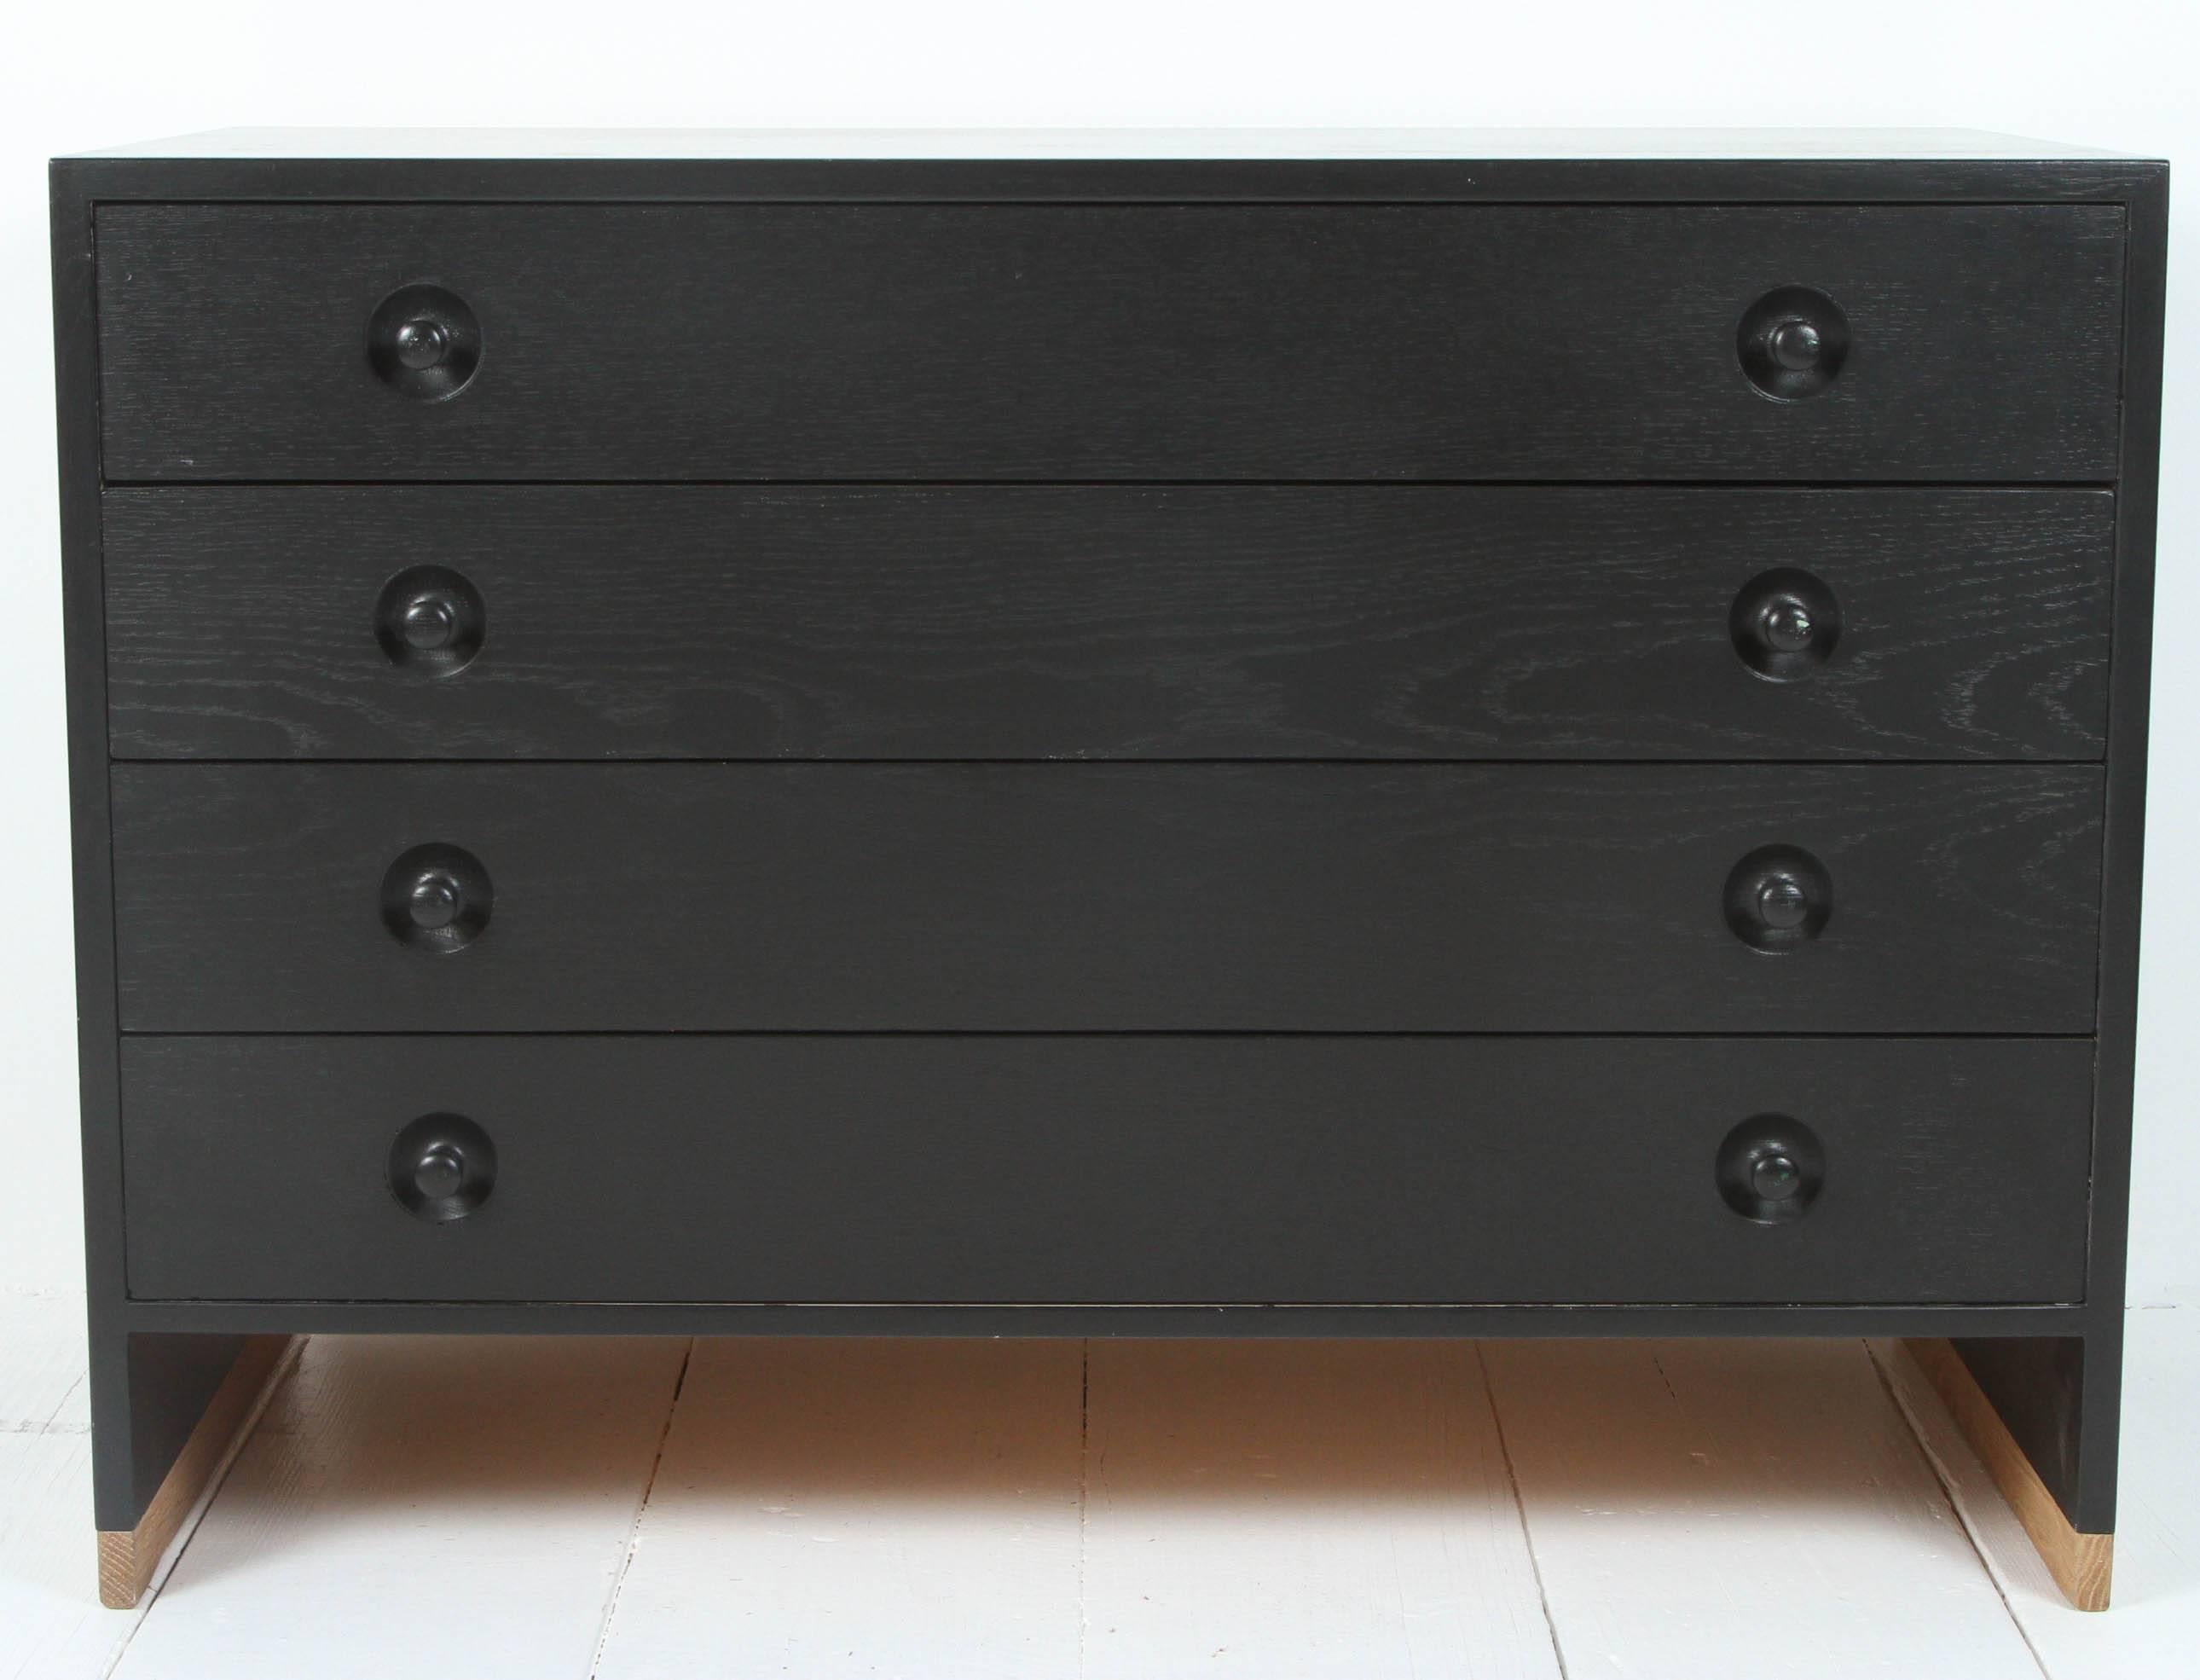 Danish Hans Wegner black four drawer dresser with wood detail at base